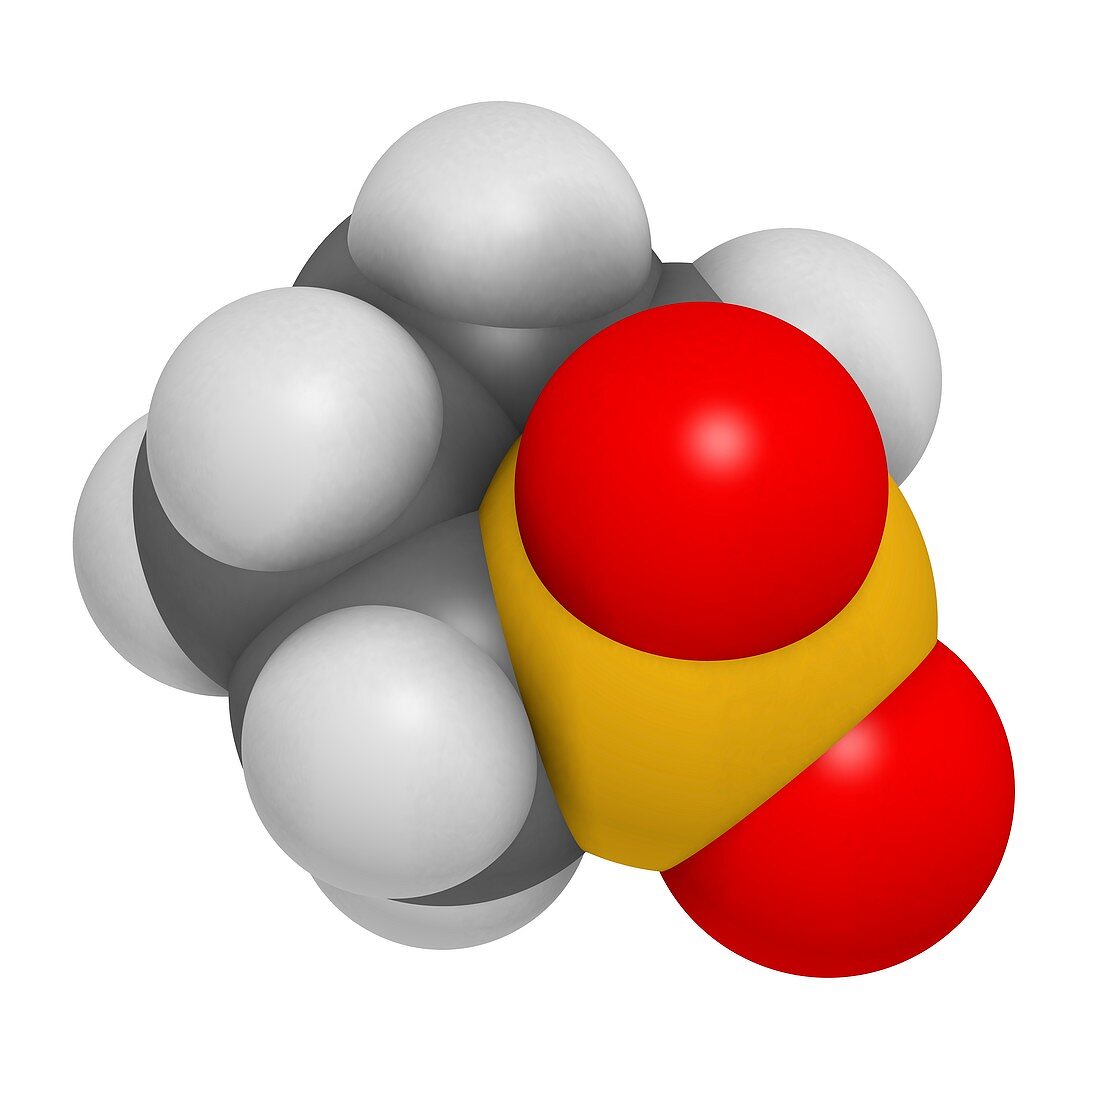 Sulfolane industrial solvent molecule